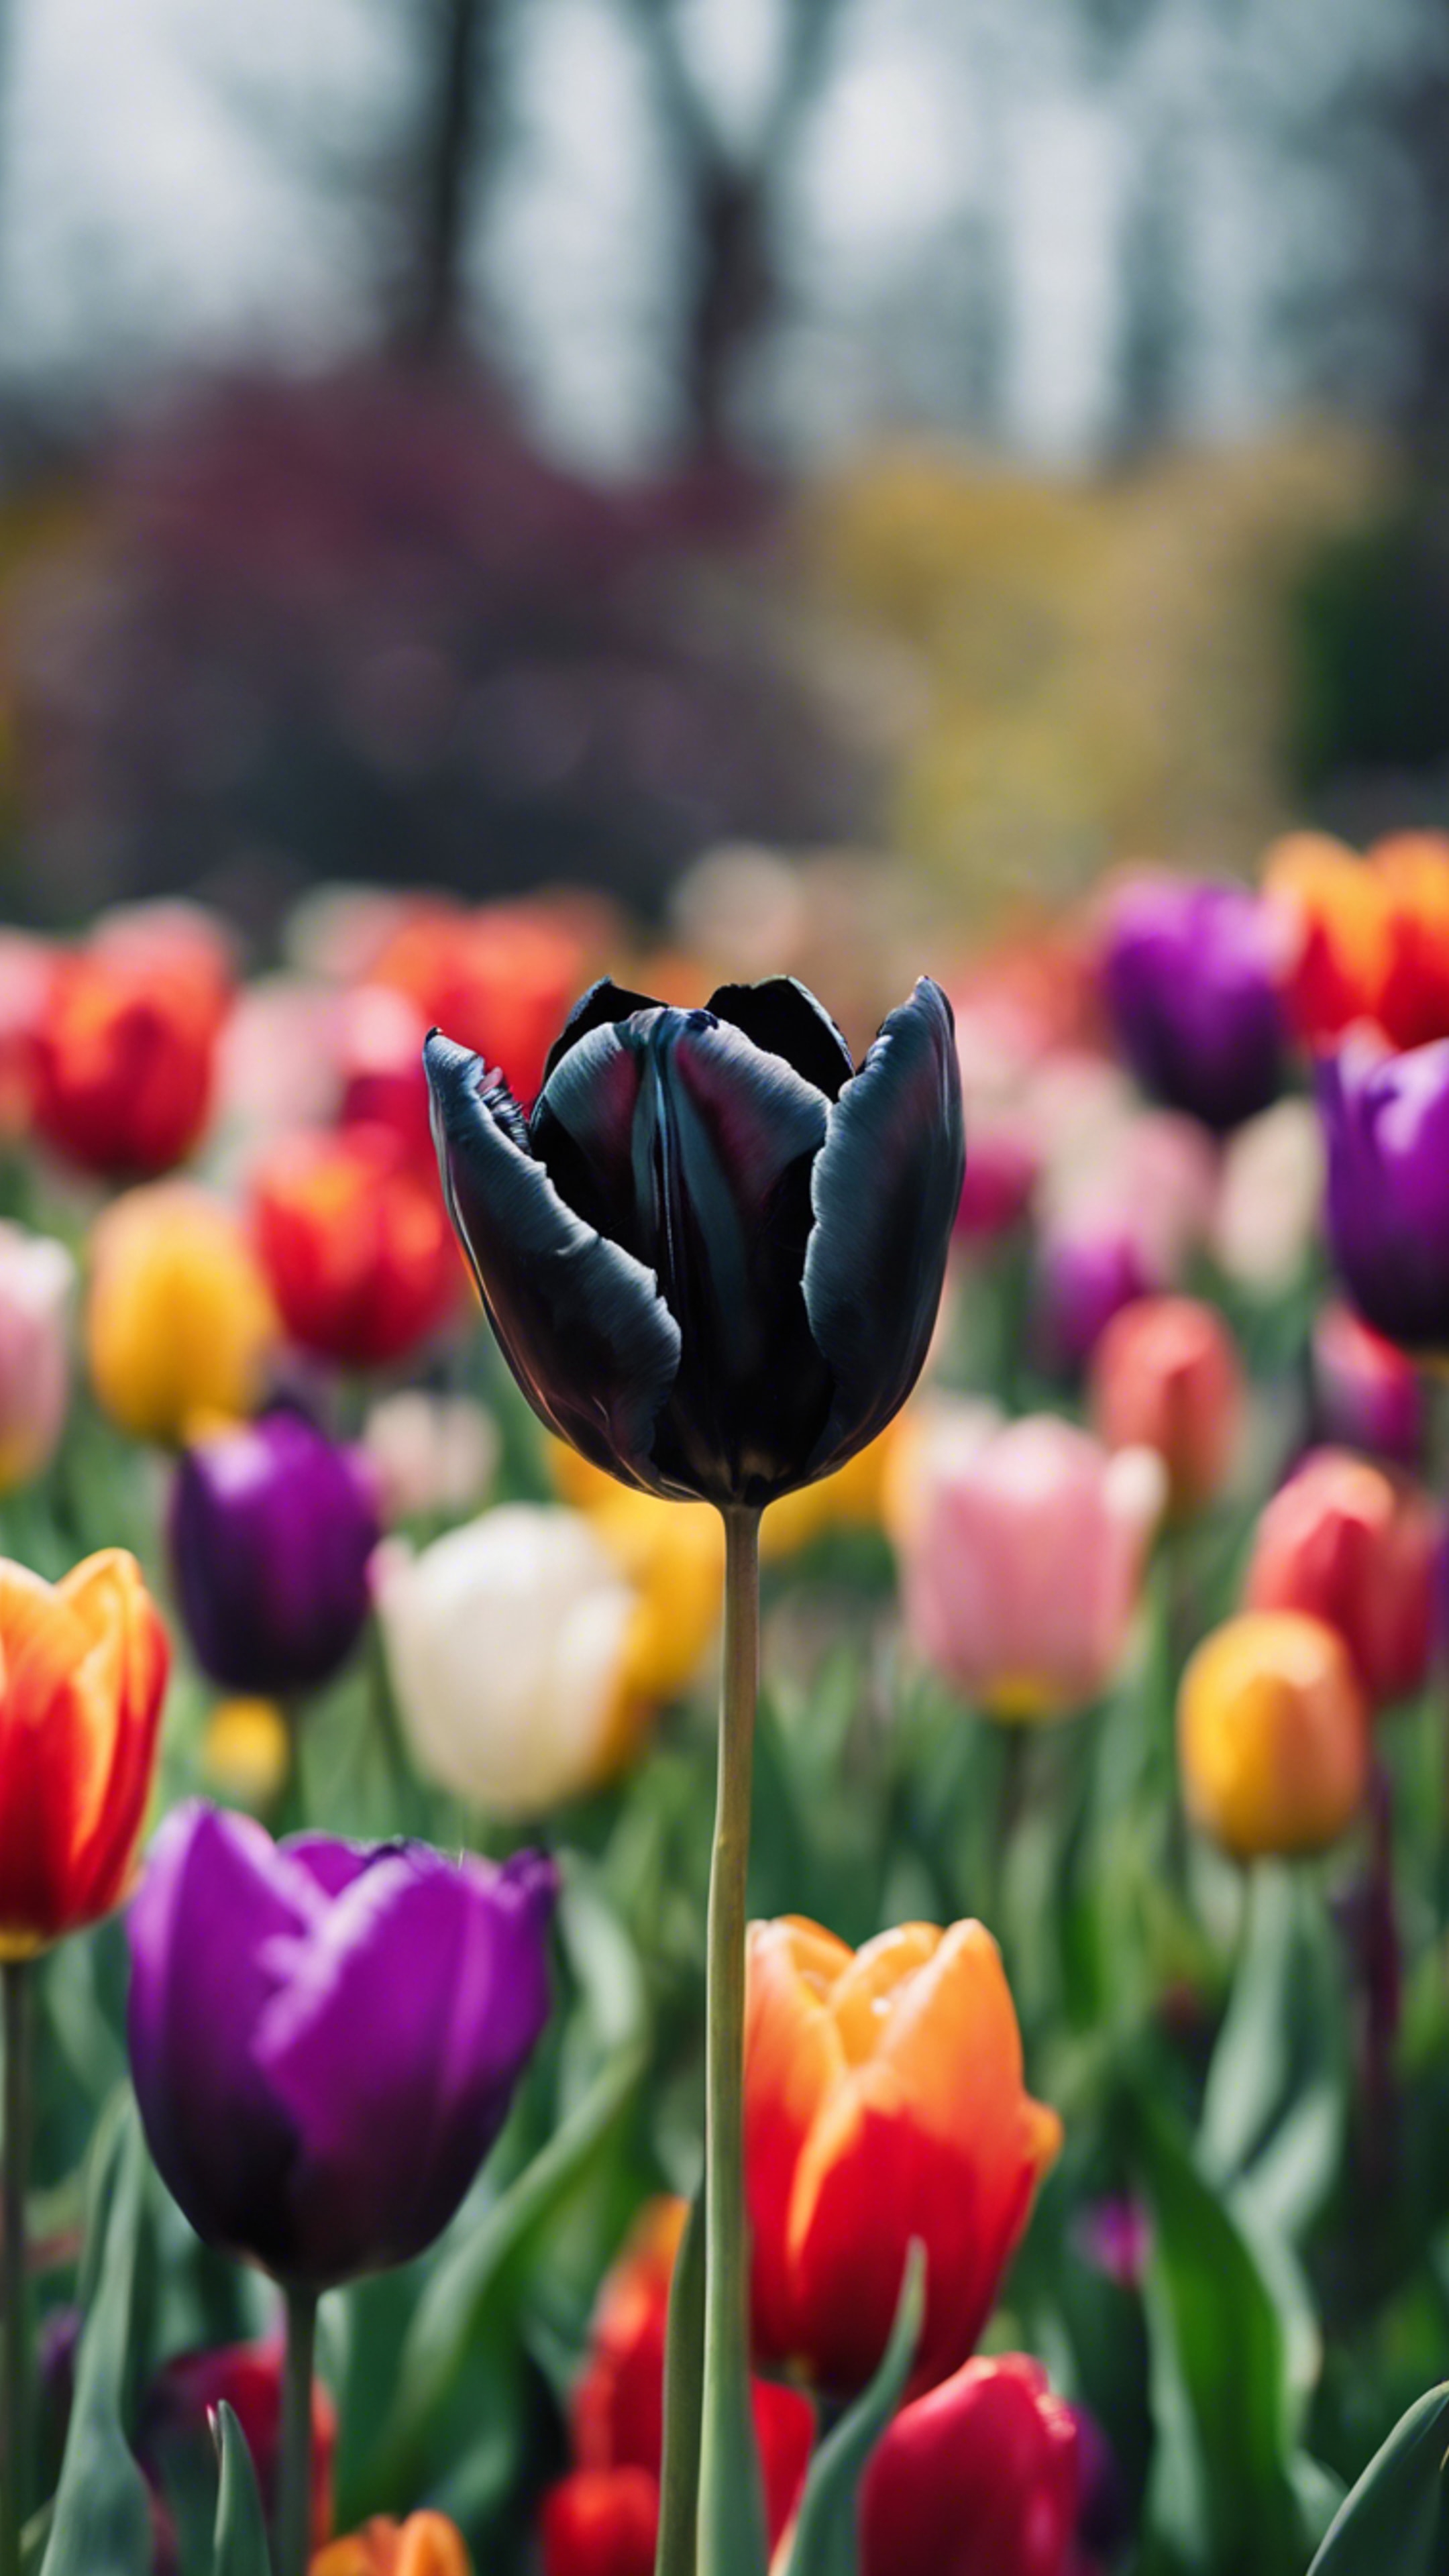 A delicate black tulip, standing out dramatically among a vibrant spray of multicolored tulips in a spring garden. Papel de parede[60dfa6a8a46243228945]